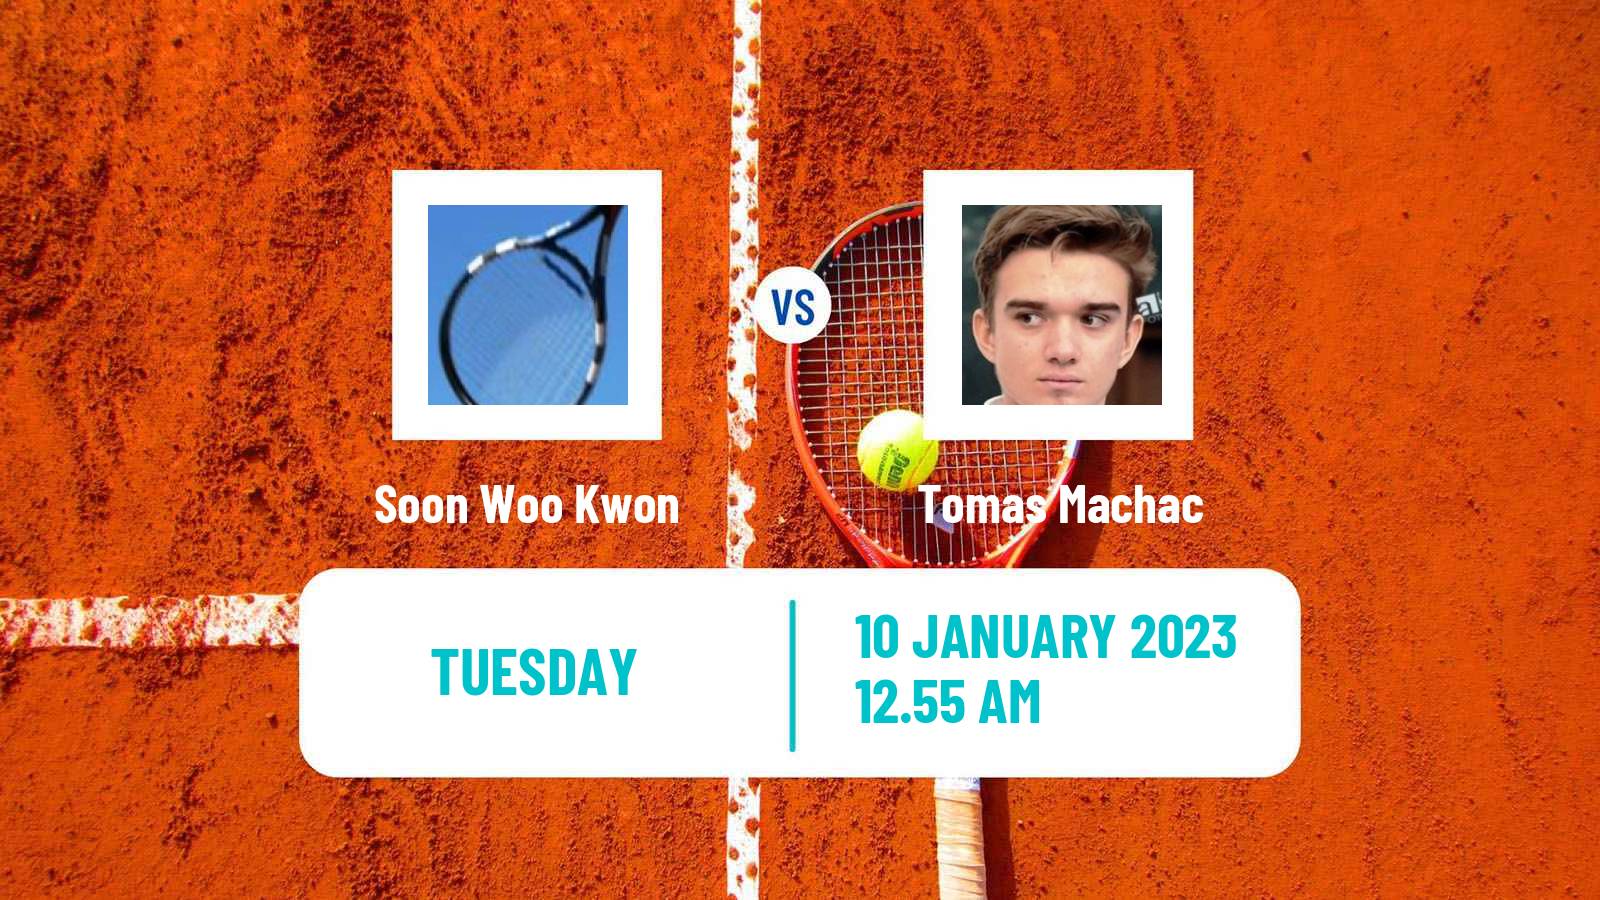 Tennis ATP Adelaide 2 Soon Woo Kwon - Tomas Machac